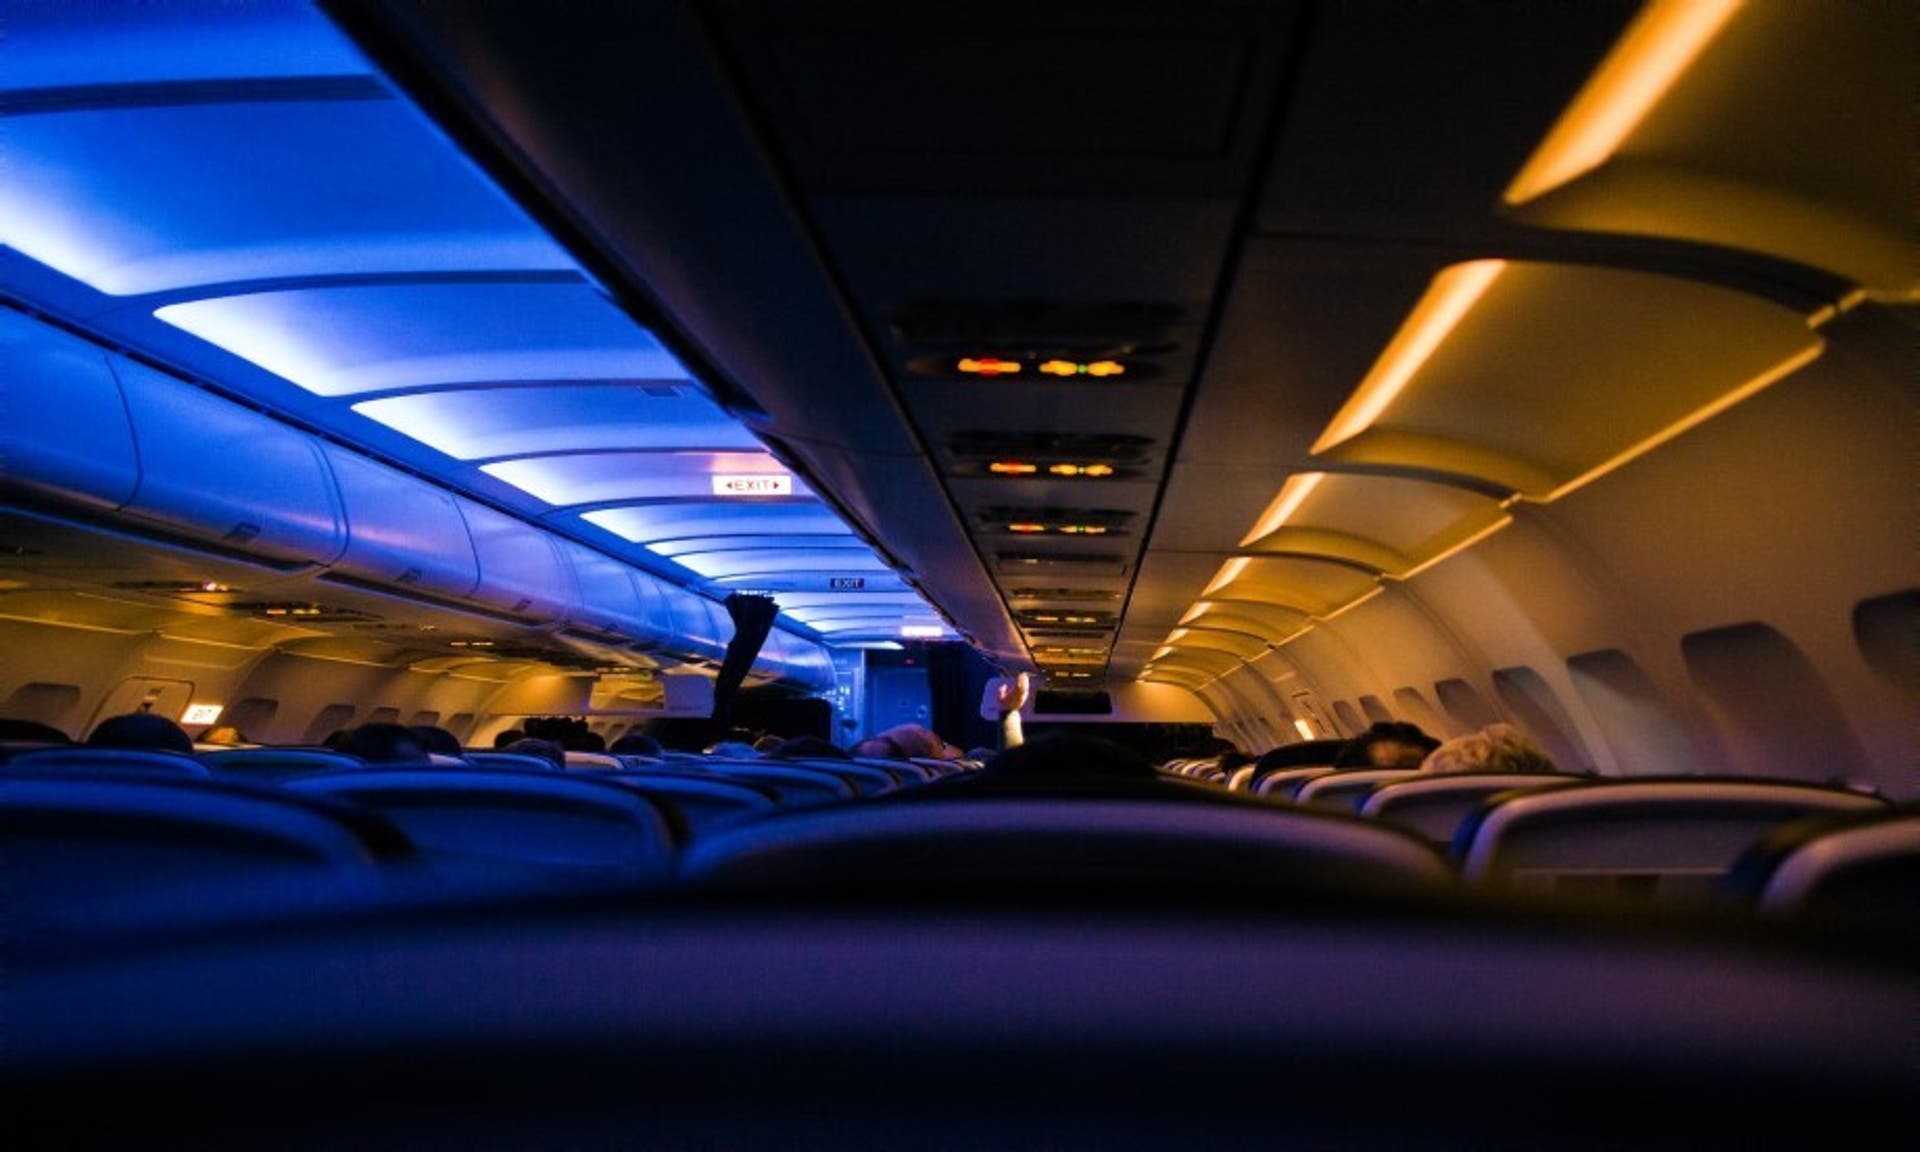  Inside of a British Airways cabin during a flight 